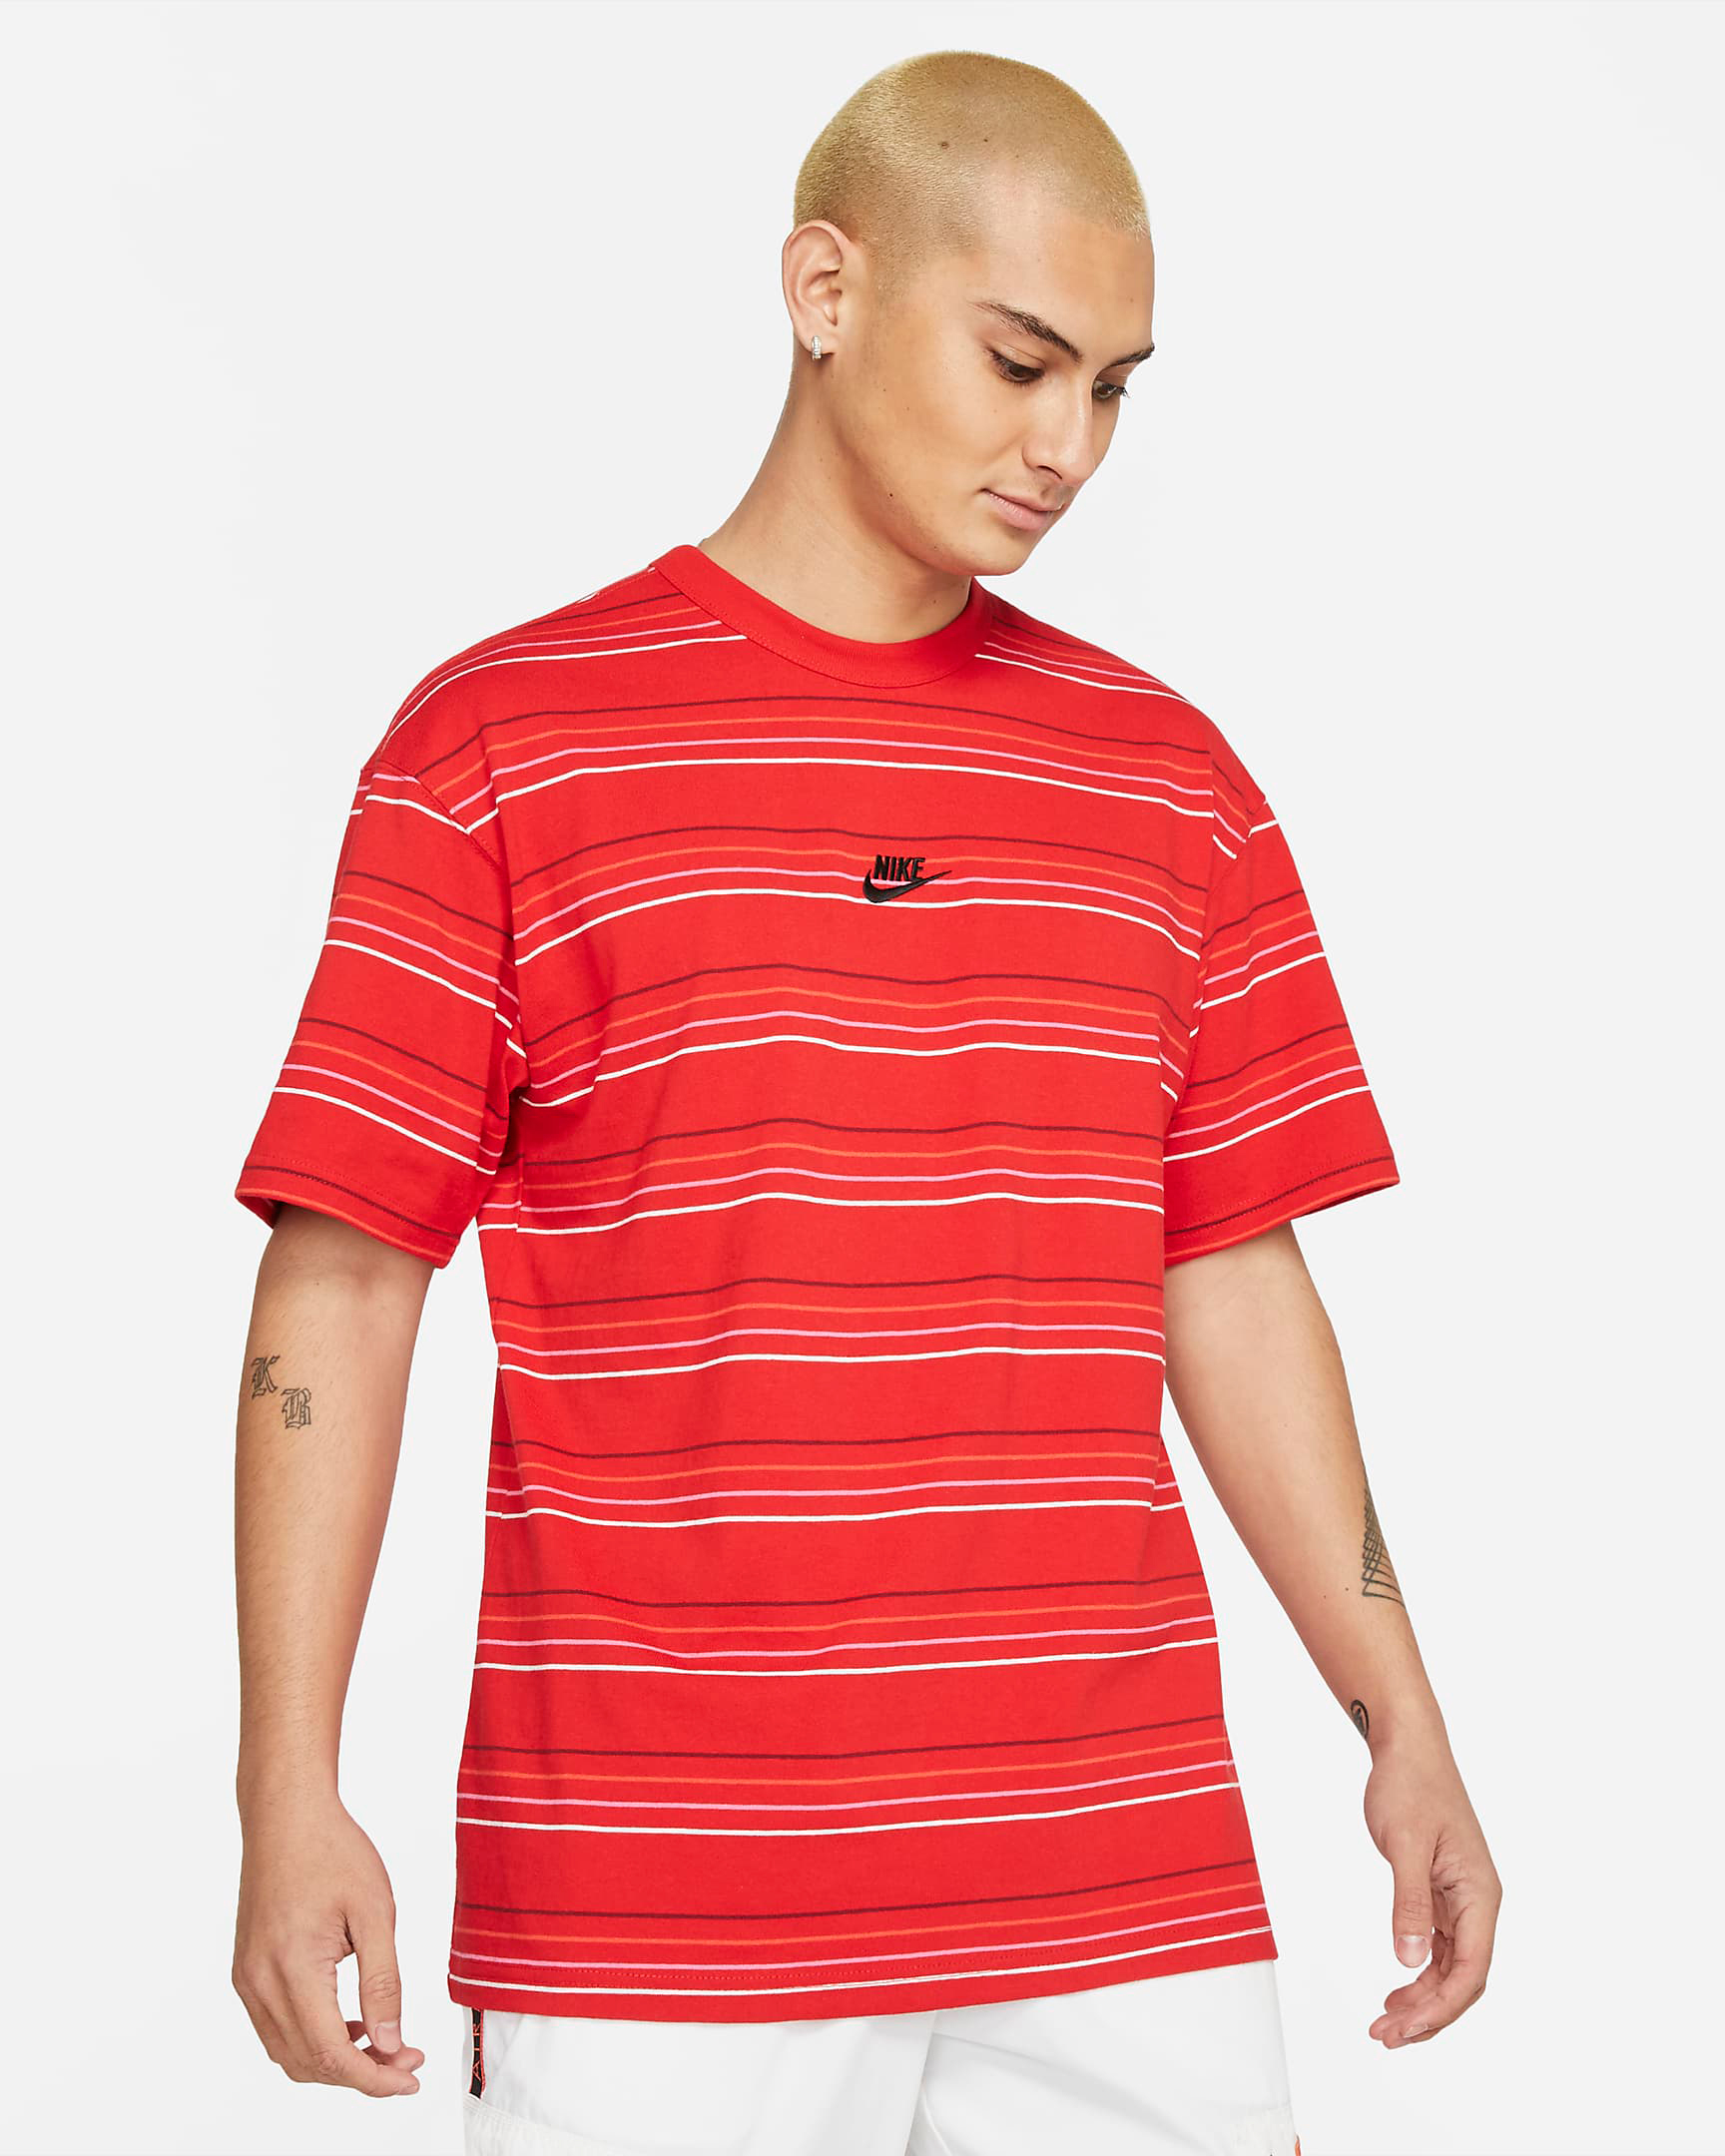 nike-sportswear-red-striped-shirt